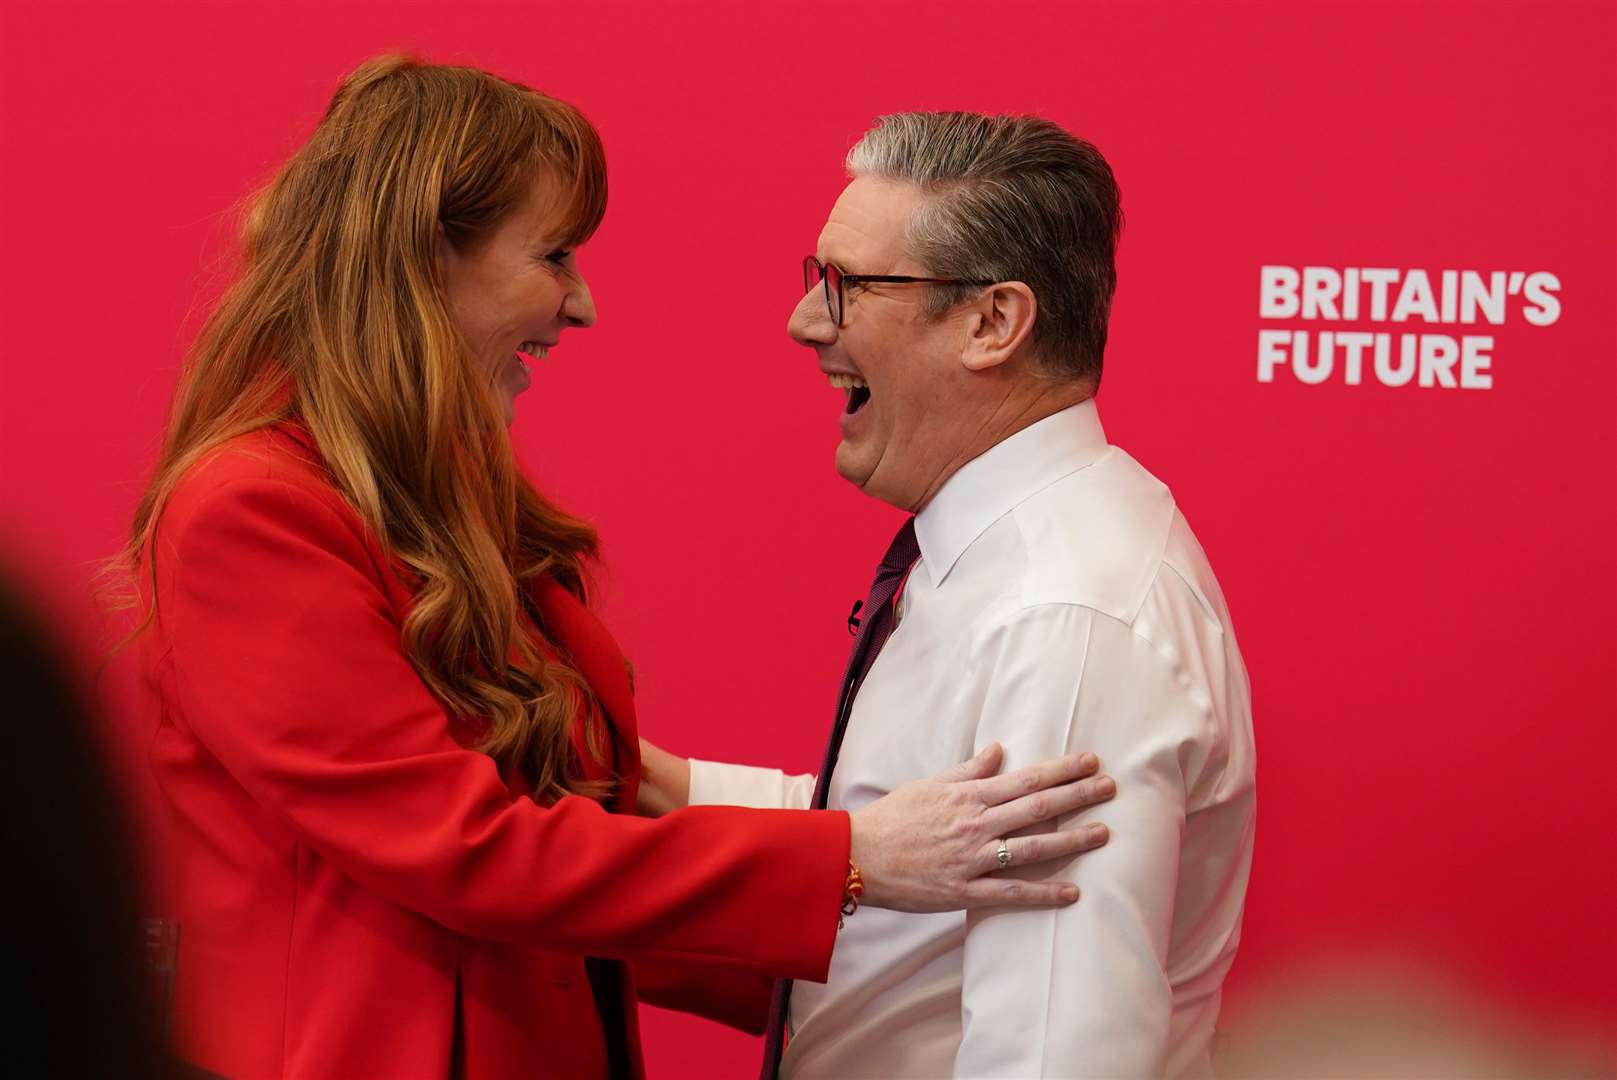 Labour leader Sir Keir Starmer was appearing at the launch alongside his deputy Angela Rayner (Jordan Pettitt/PA)